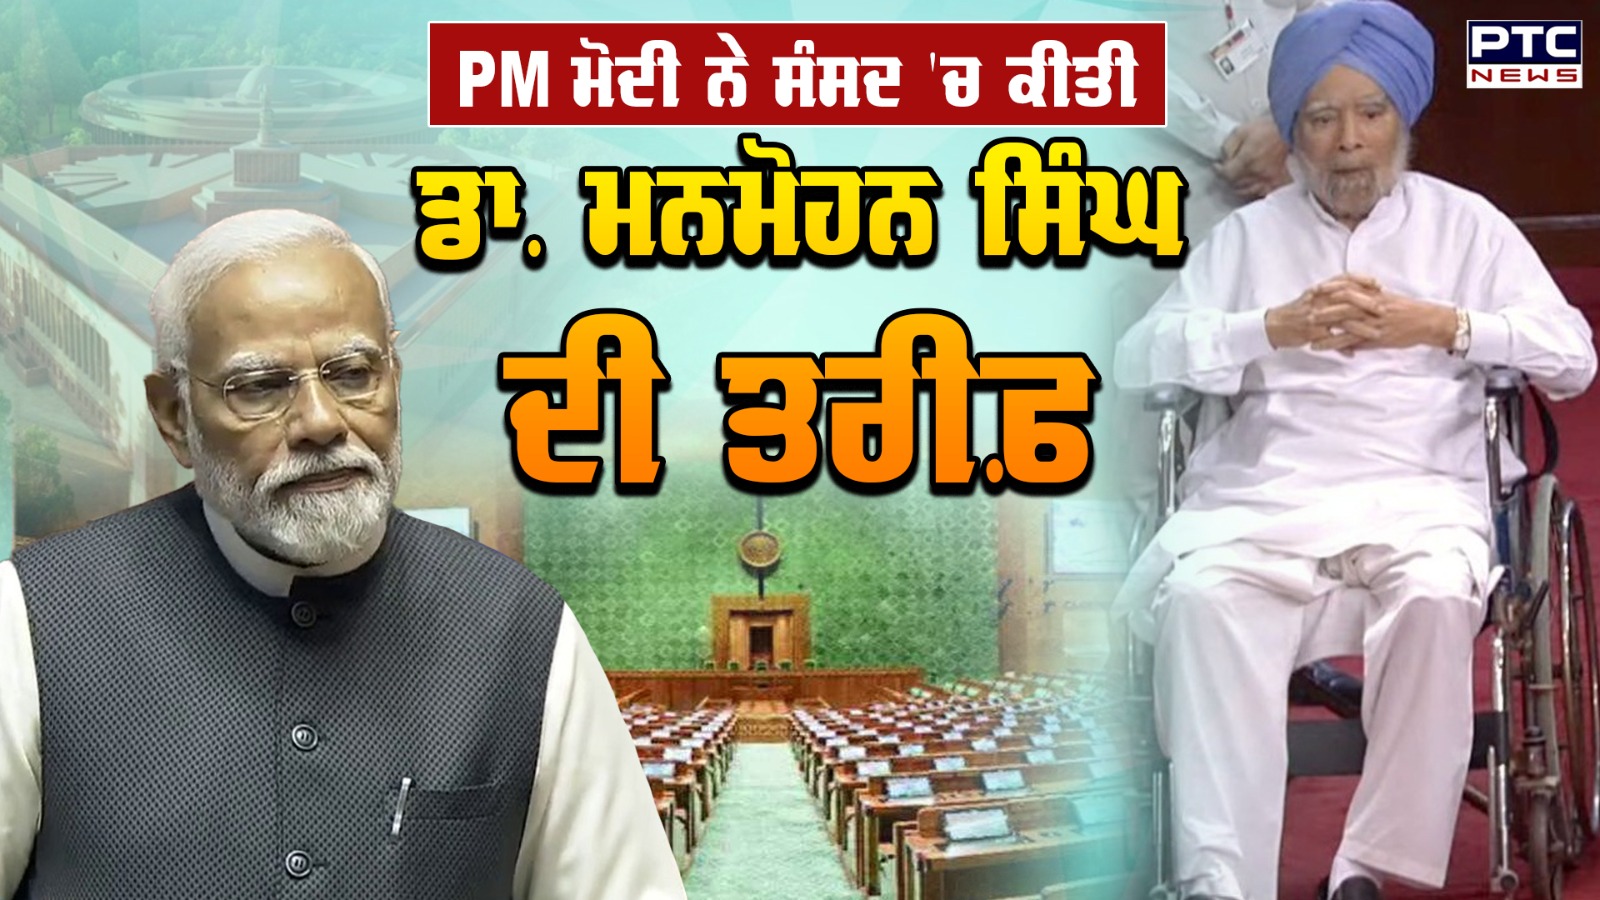 PM Narendra Modi ਨੇ Parliament 'ਚ Dr. Manmohan Singh ਦੀ ਇੰਝ ਕੀਤੀ ਤਾਰੀਫ਼